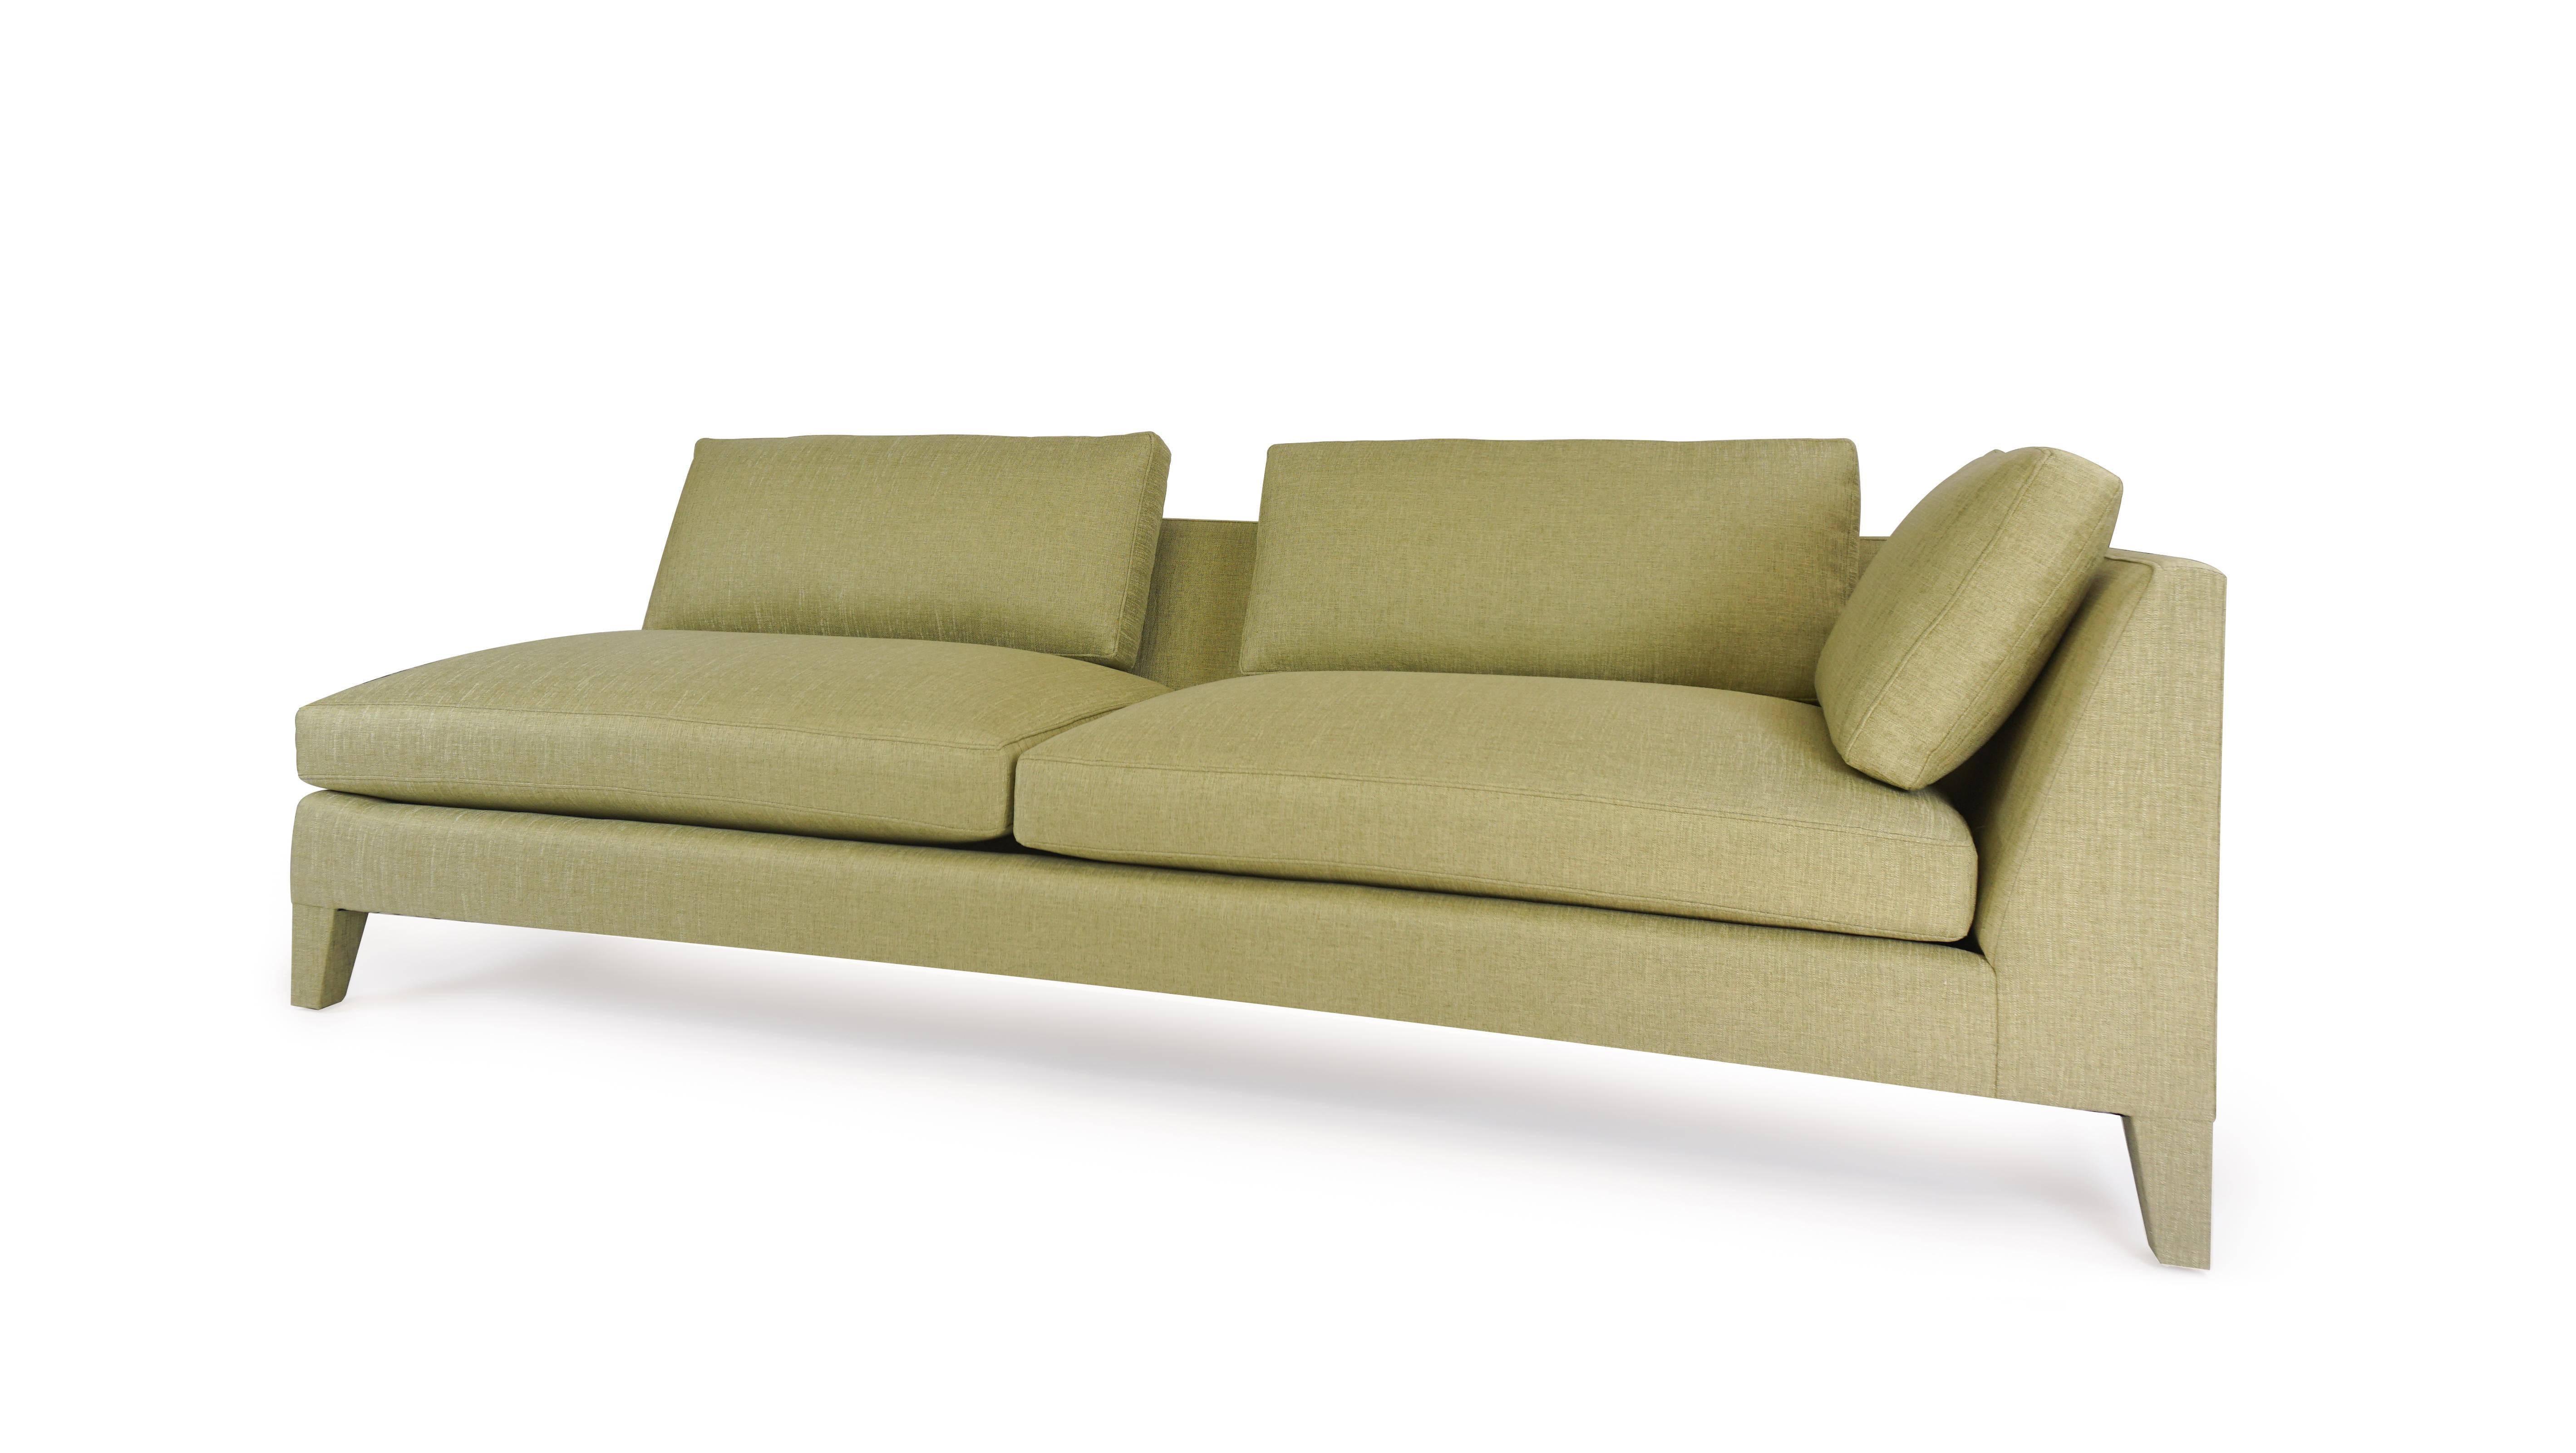 cushion for sectional sofa